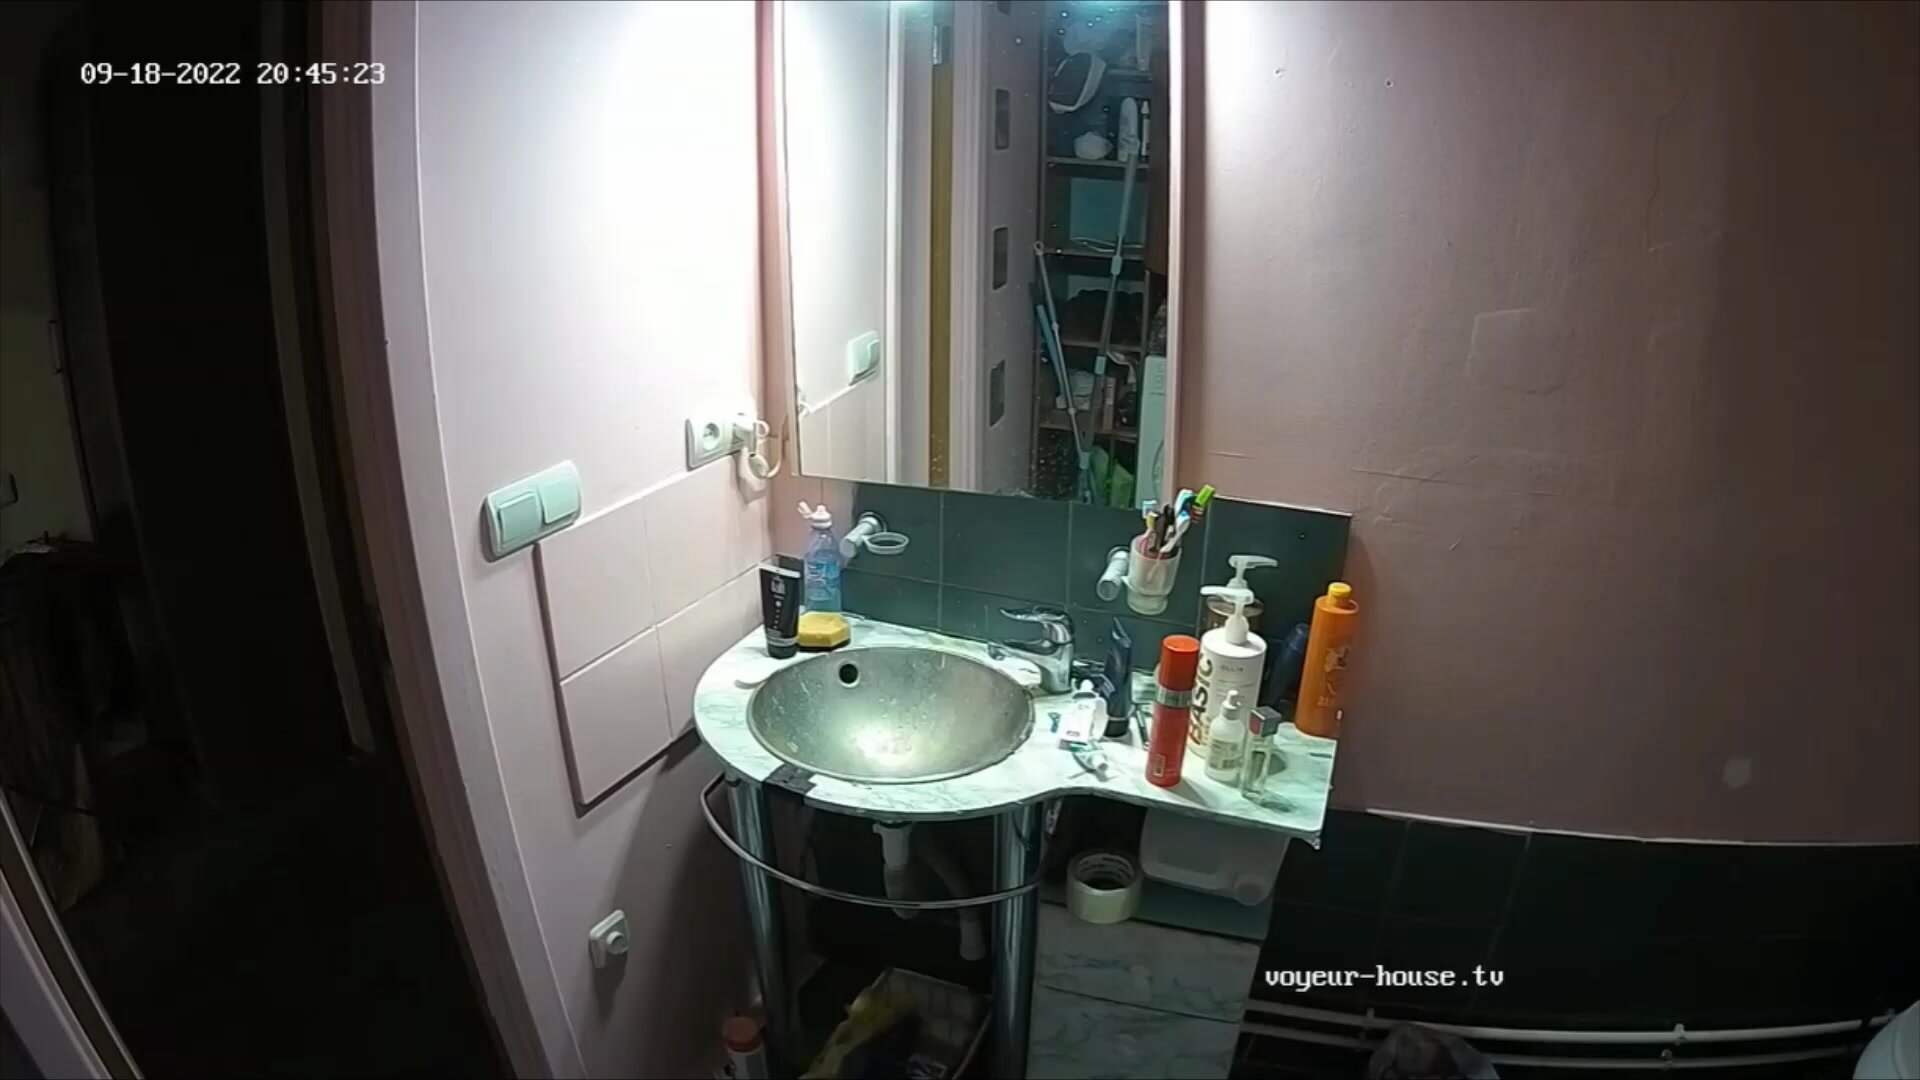 Woman in Bathroom 47